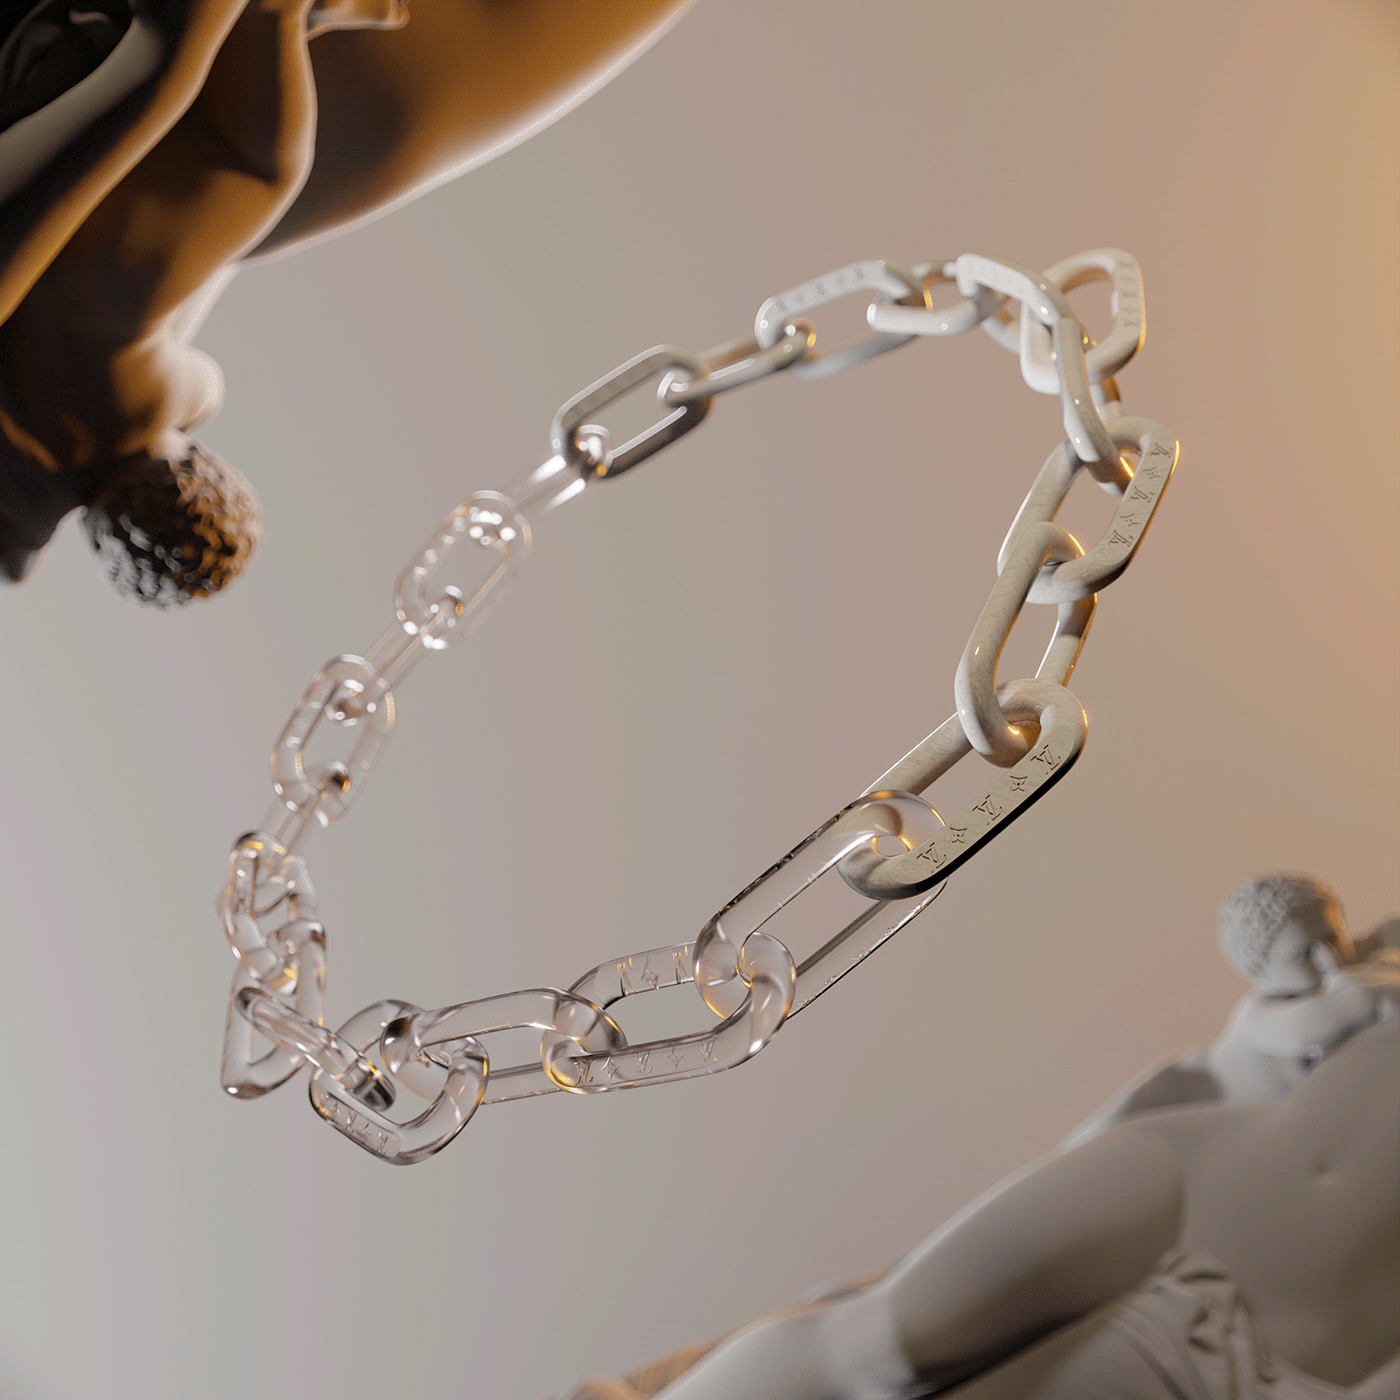 fashion accessory Jewellery CGI 3D Render visualization Advertising  Louis vuitton blender Digital Art 